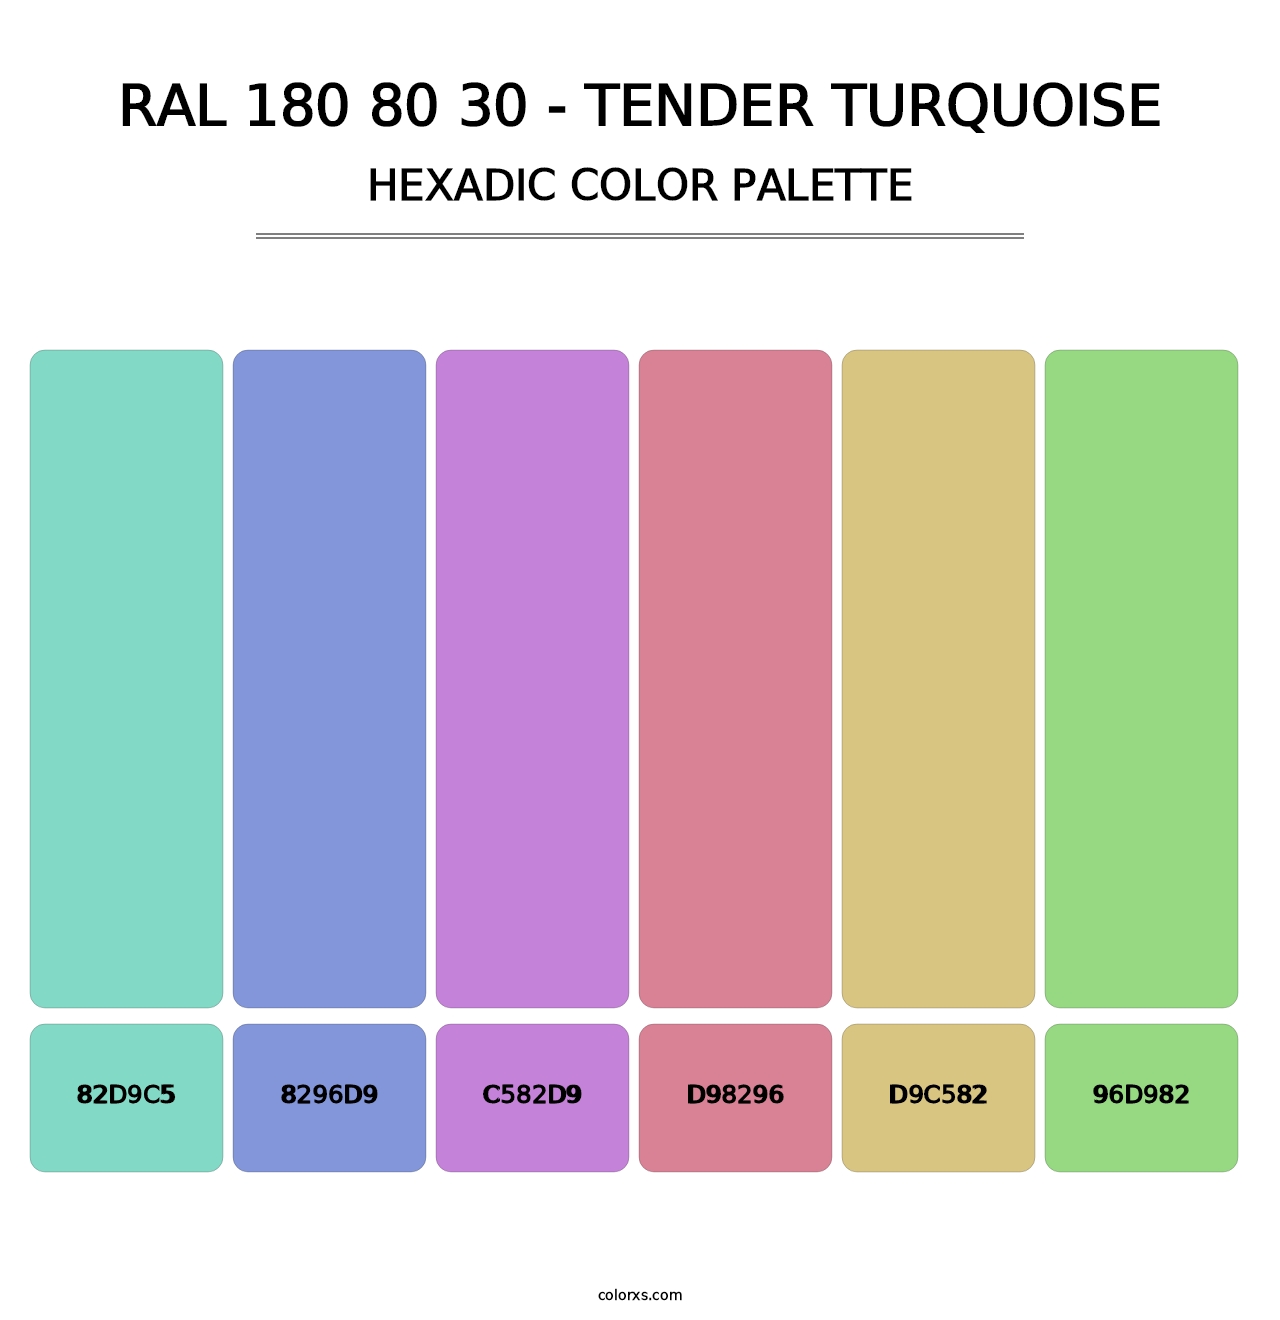 RAL 180 80 30 - Tender Turquoise - Hexadic Color Palette